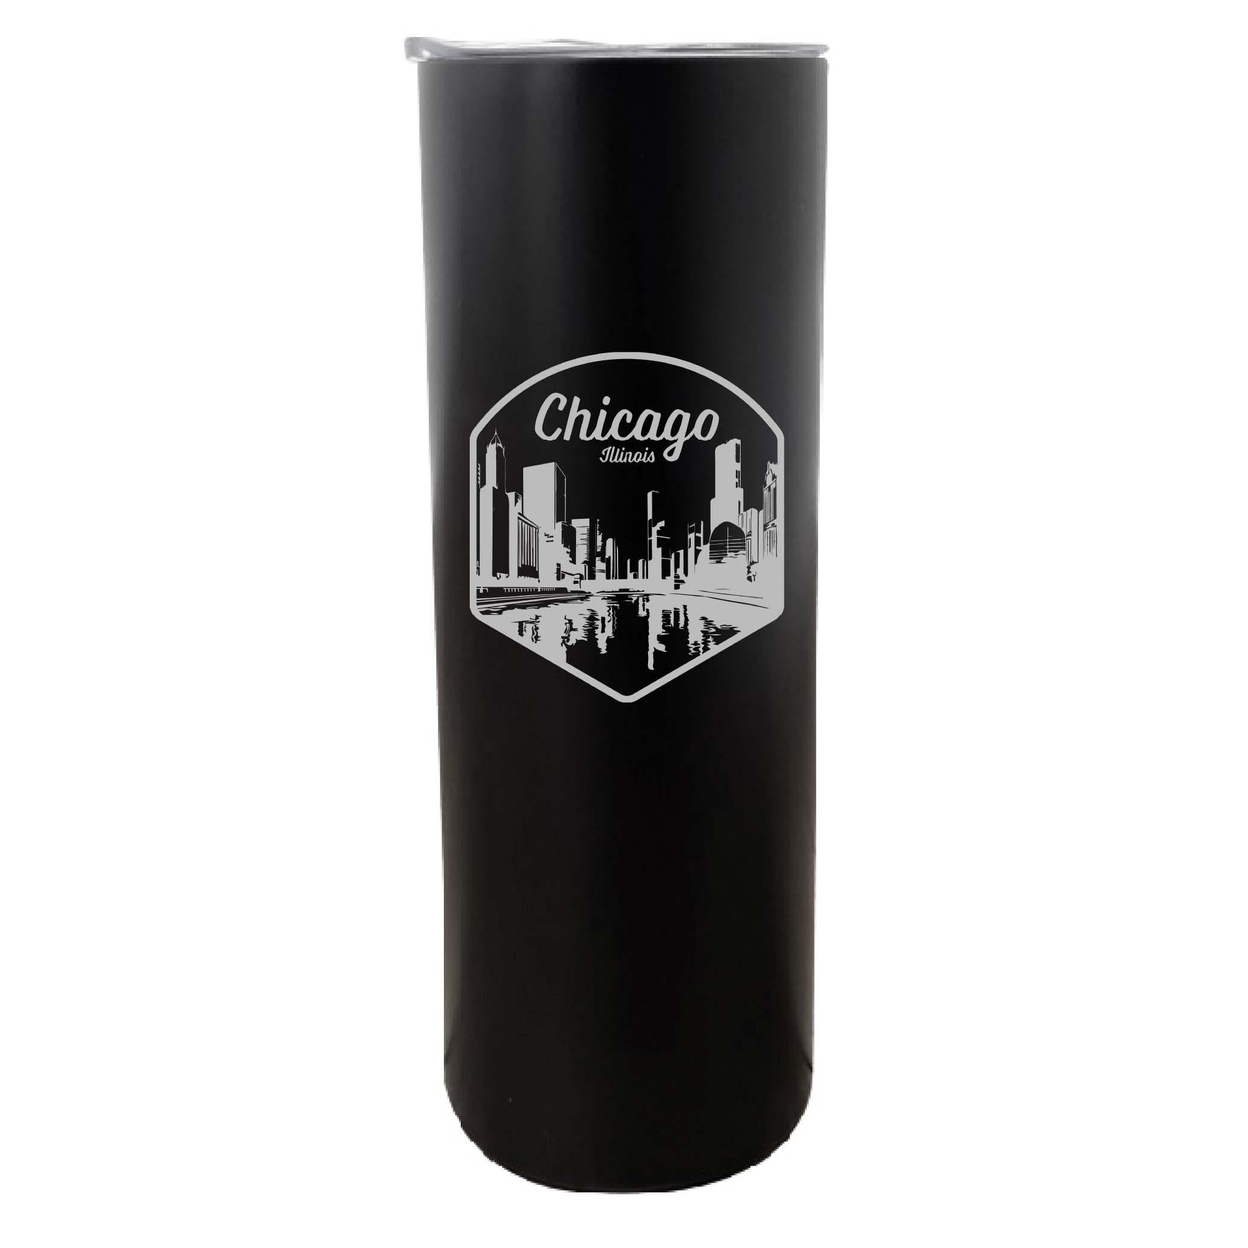 Chicago Illinois Souvenir 20 Oz Engraved Insulated Skinny Tumbler - Gray Glitter,,2-Pack